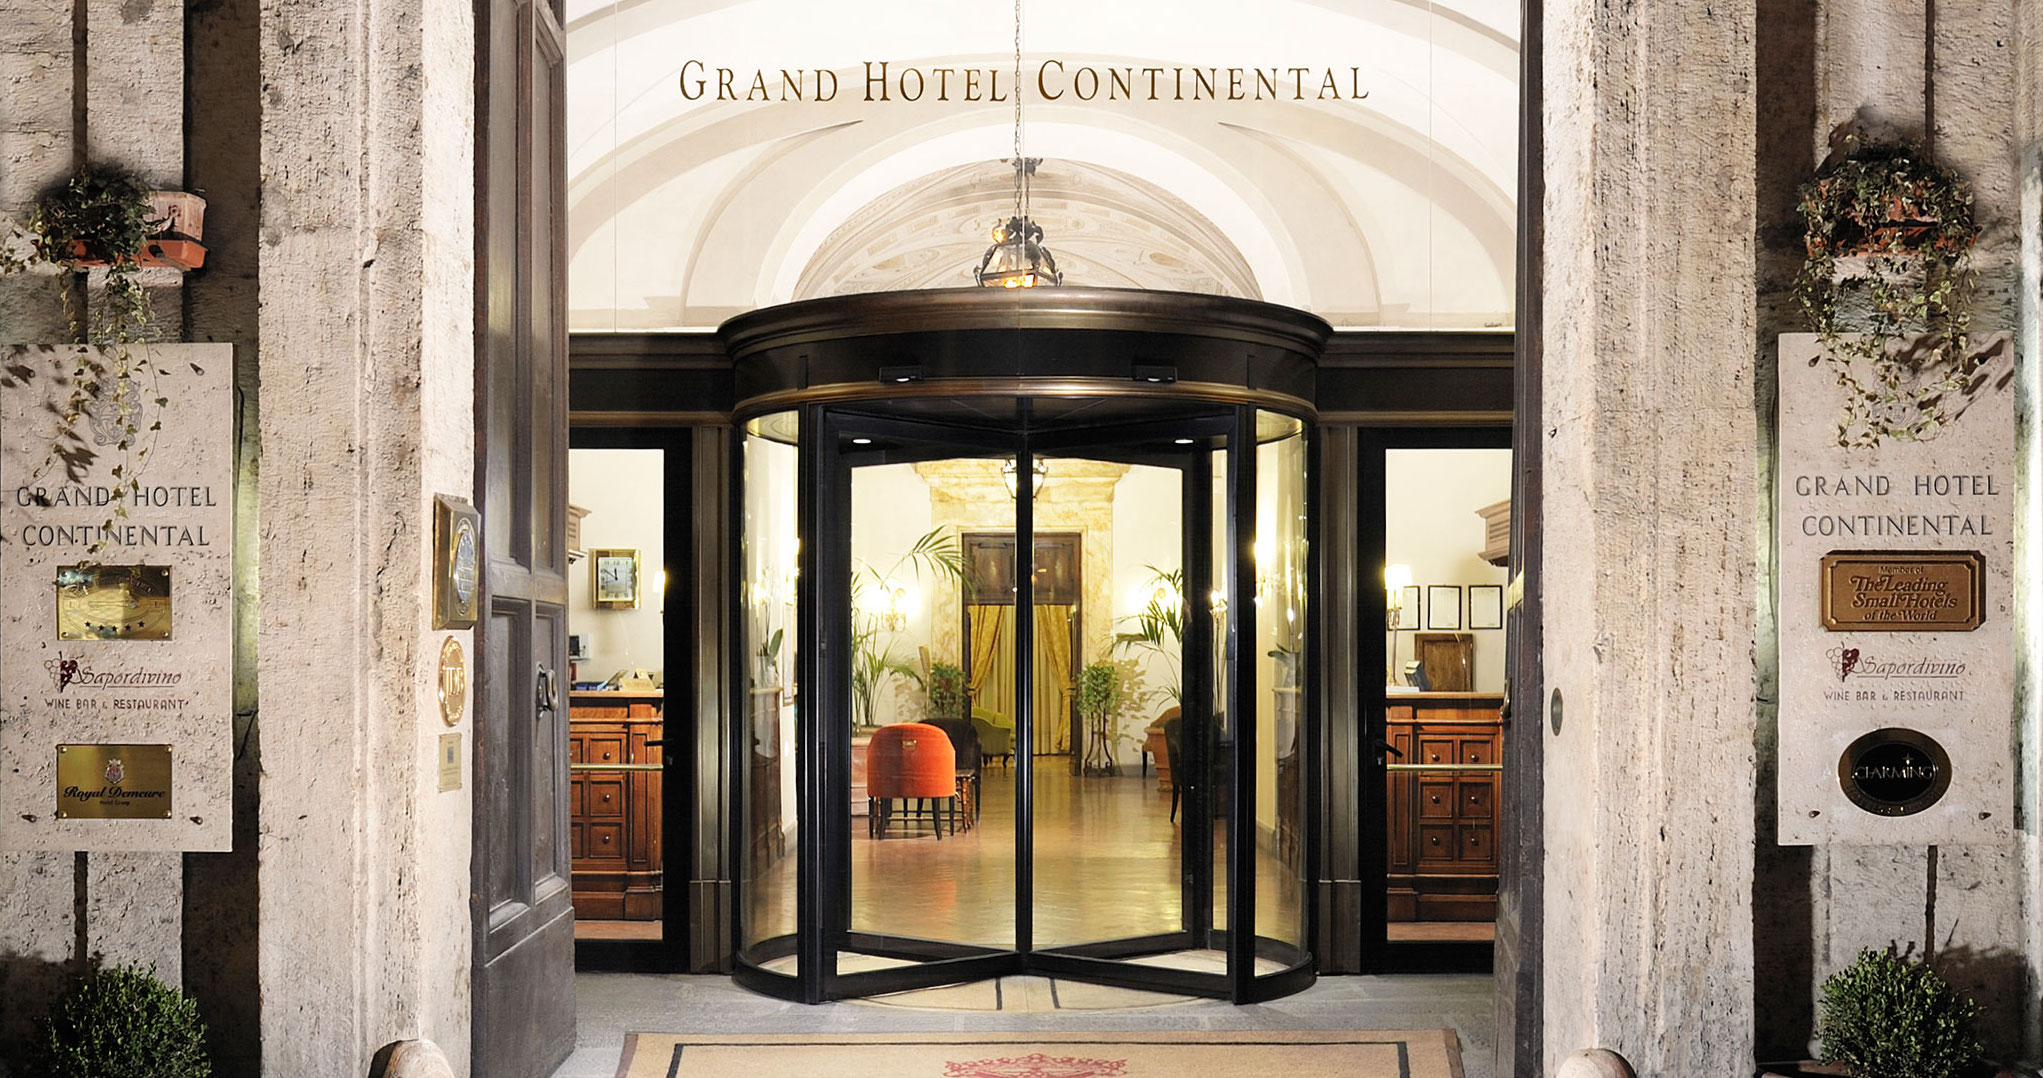  Grand Hotel Continental ***** , Siena / Italy 